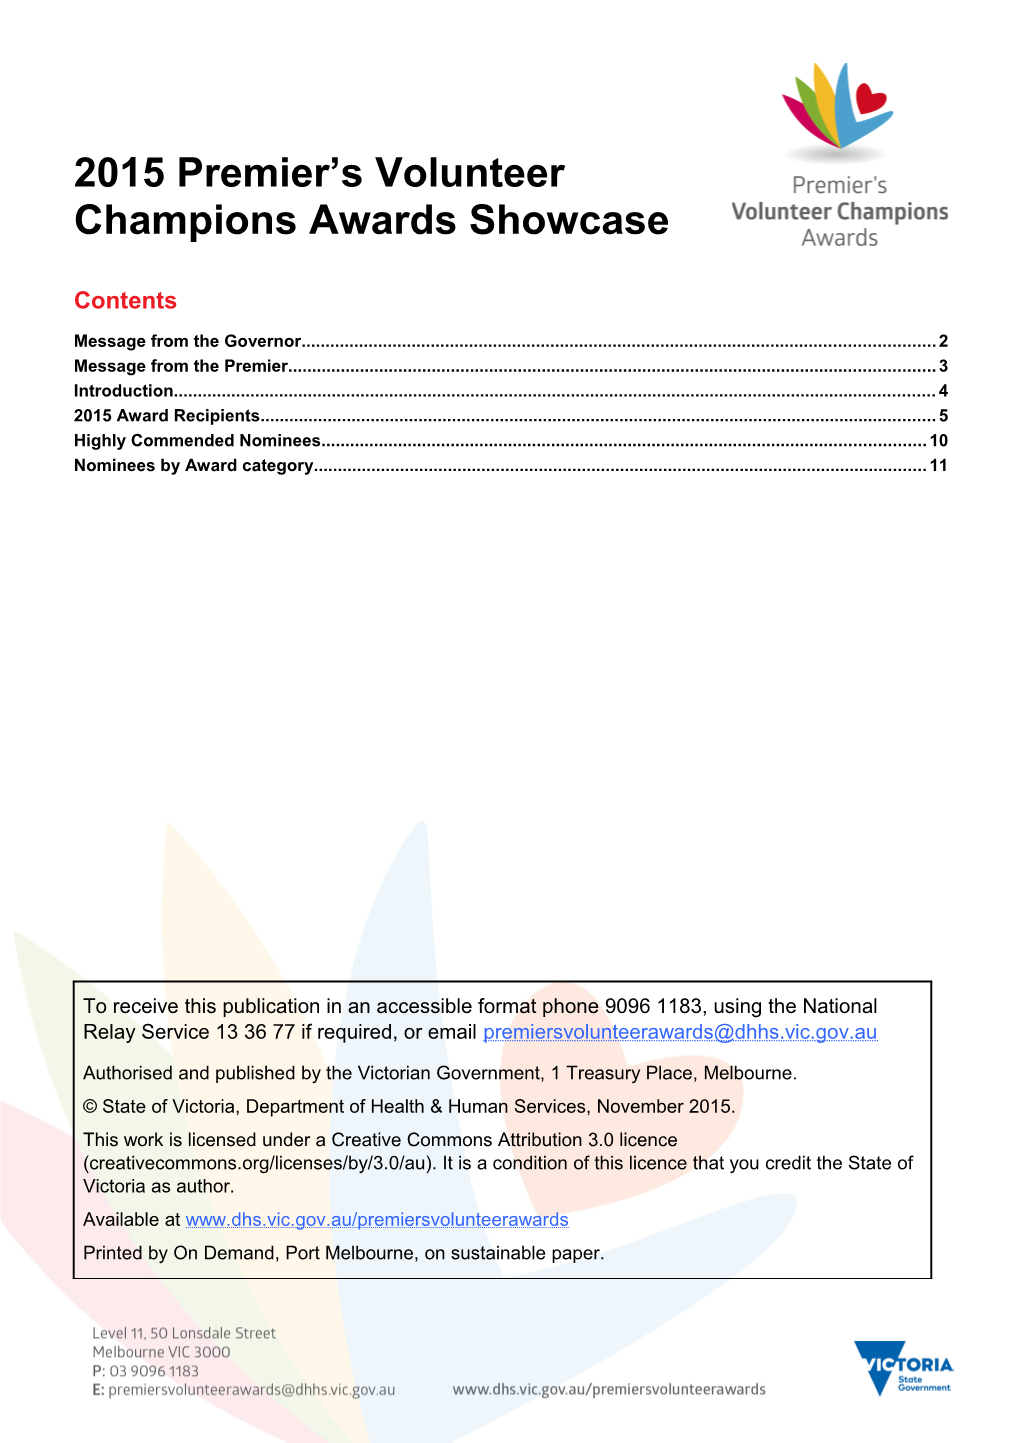 2015 Premier's Volunteer Champions Awards Showcase